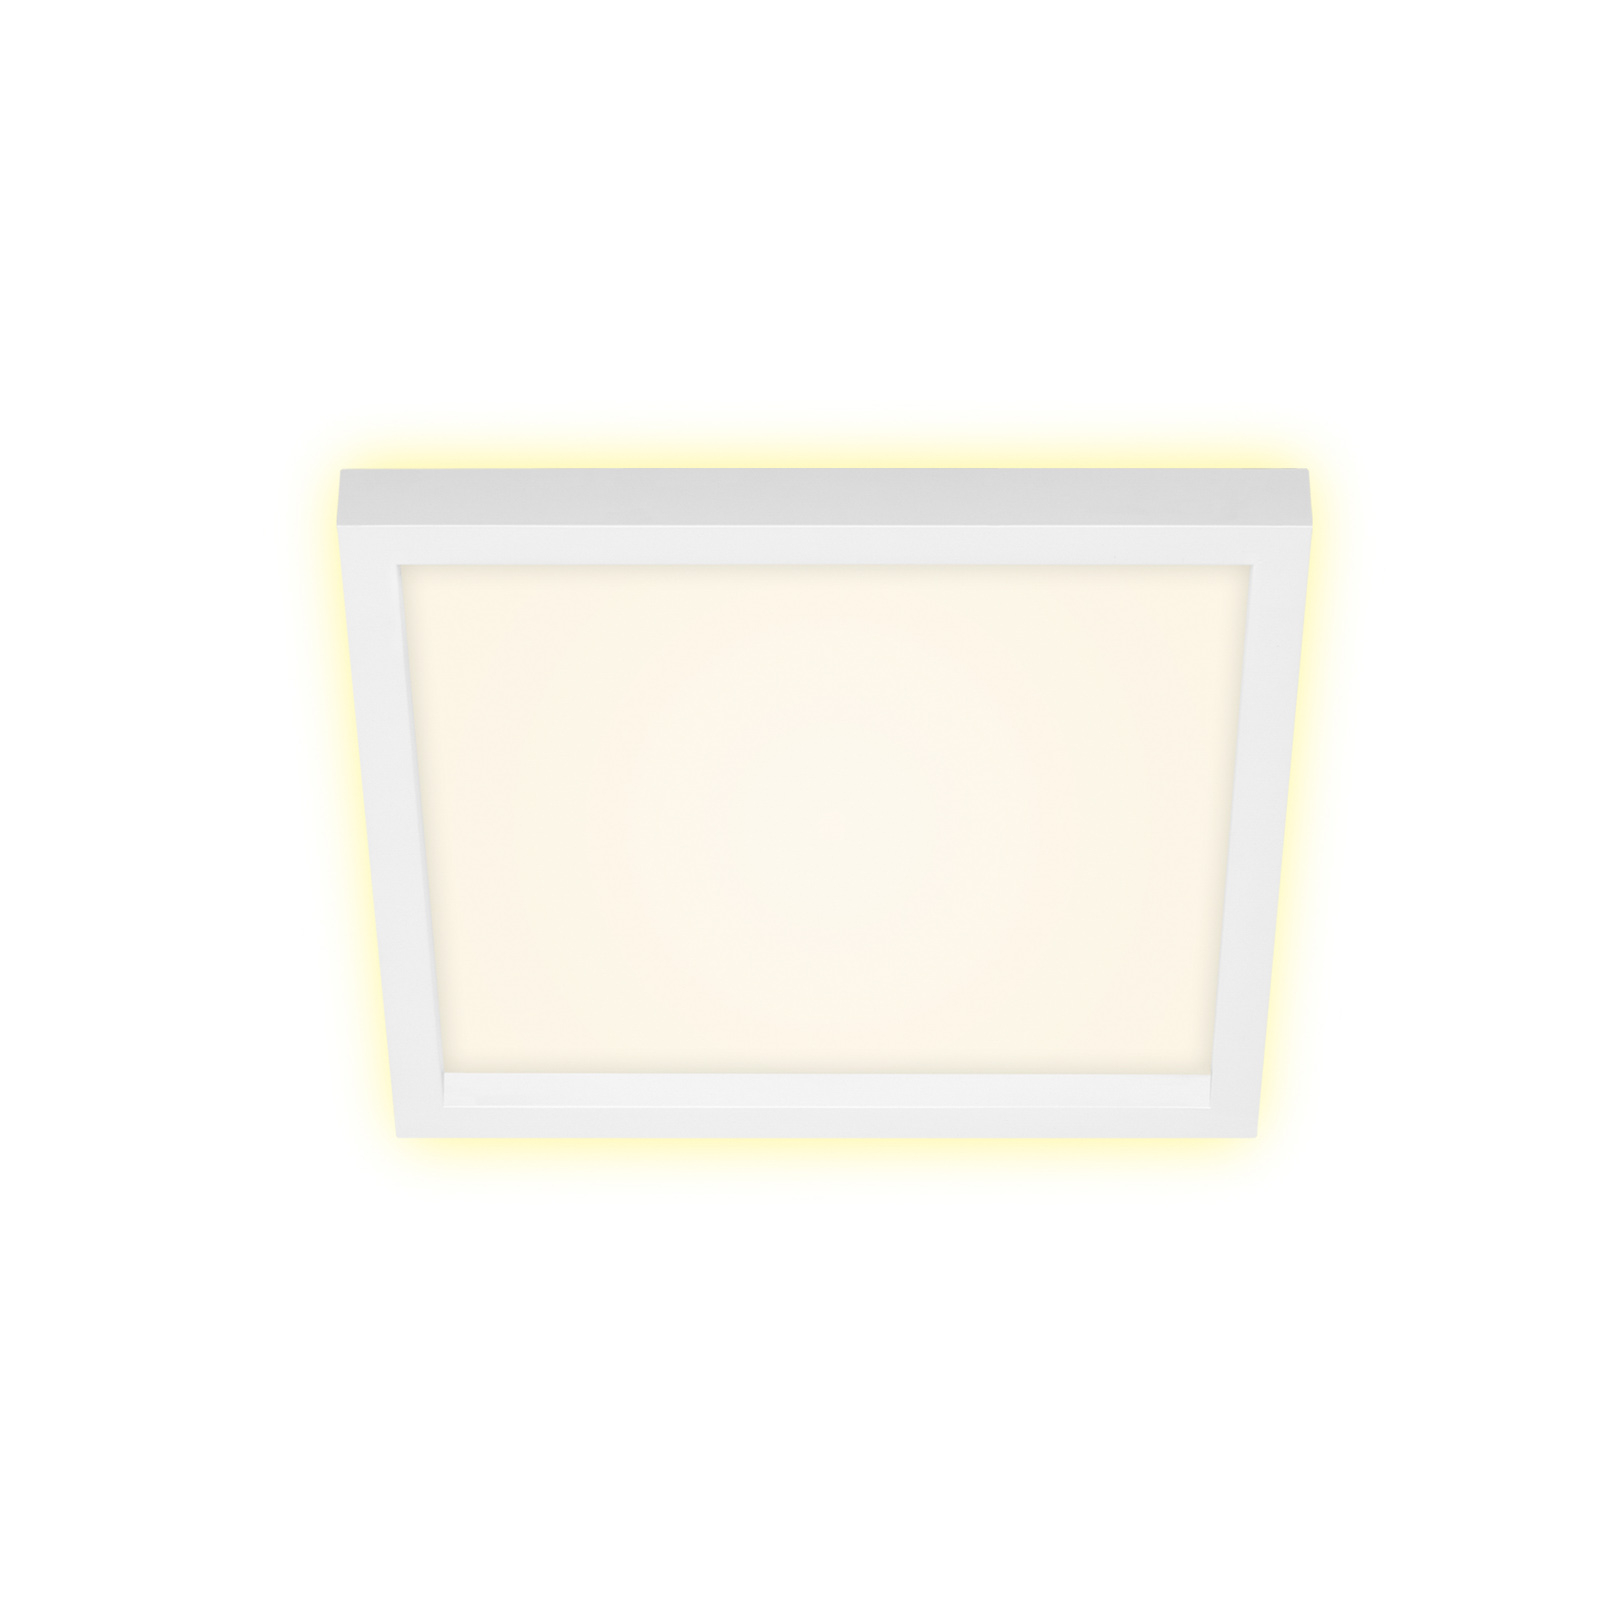 Plafoniera LED 7362, 29 x 29 cm, bianco